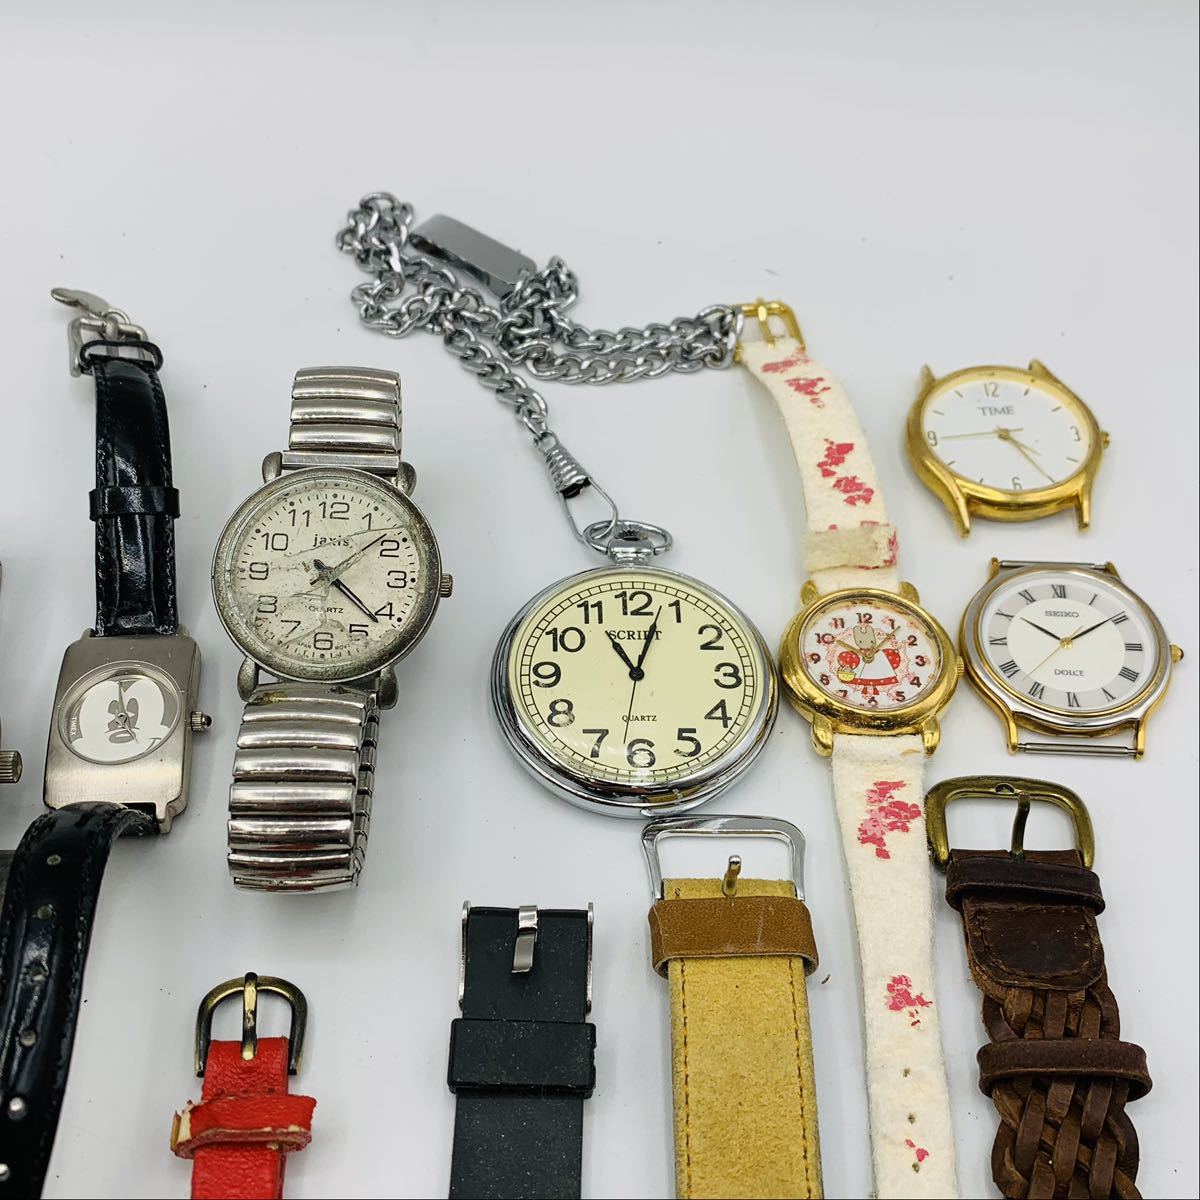 HG1 262 時計20点 まとめ売り まとめて 大量 腕時計 懐中時計 SEIKO セイコー FOSSIL フォッシル デジタル スマートウォッチ カレンダー TY_画像3